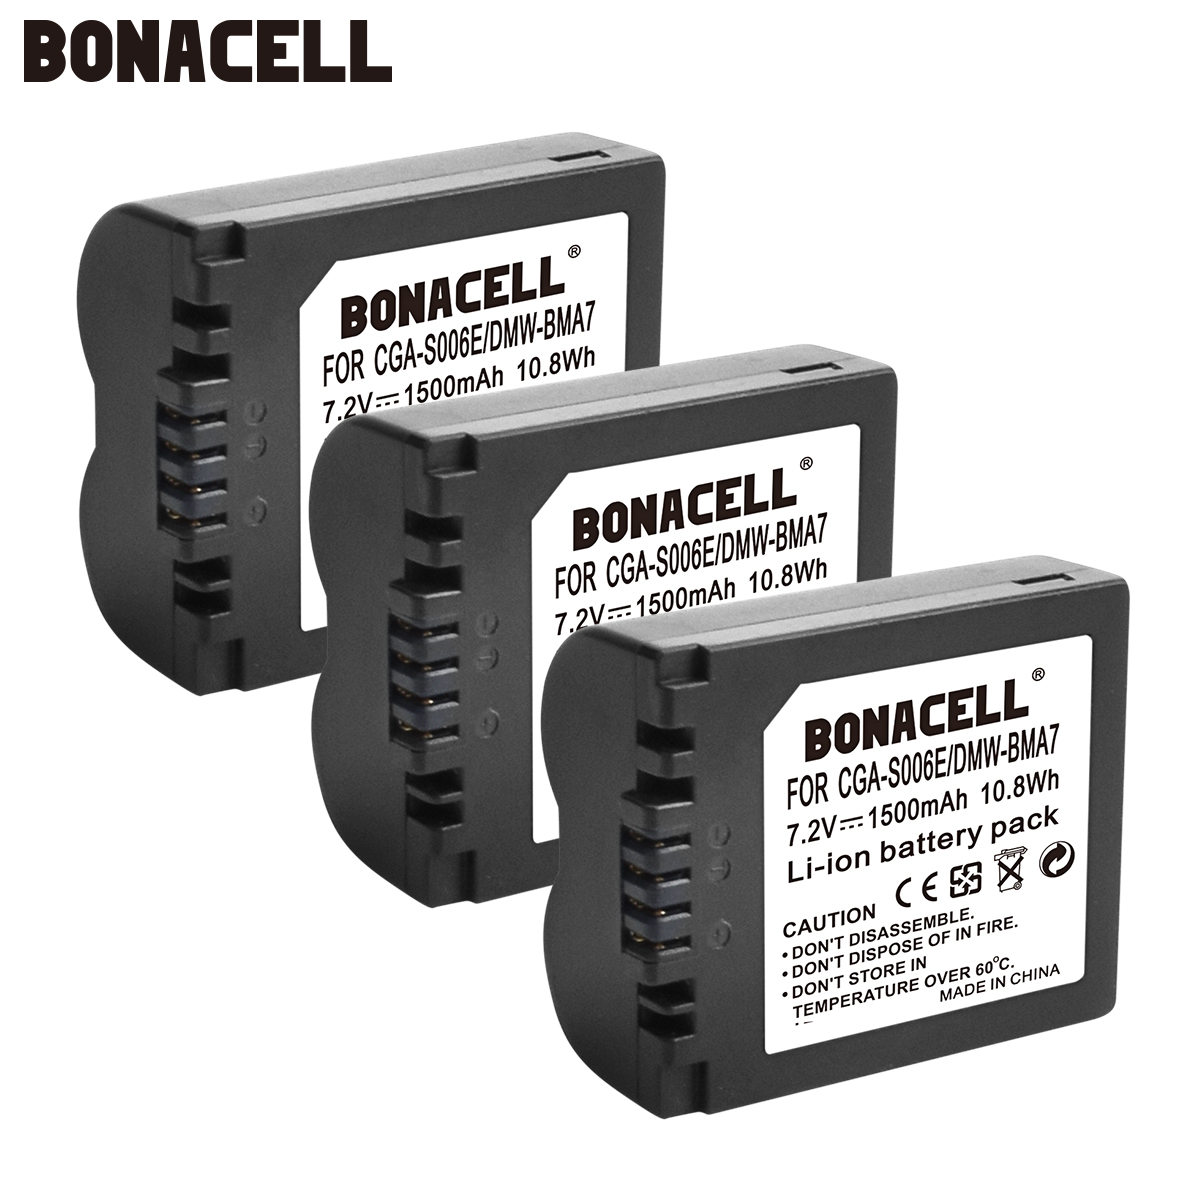 Bonacell 1500mAh CGA-S006 CGR CGA S006E S006A S006 DMW-BMA7 Camera Batterij voor Panasonic DMC FZ7 FZ8 FZ18 FZ28 FZ50 FZ30 L50